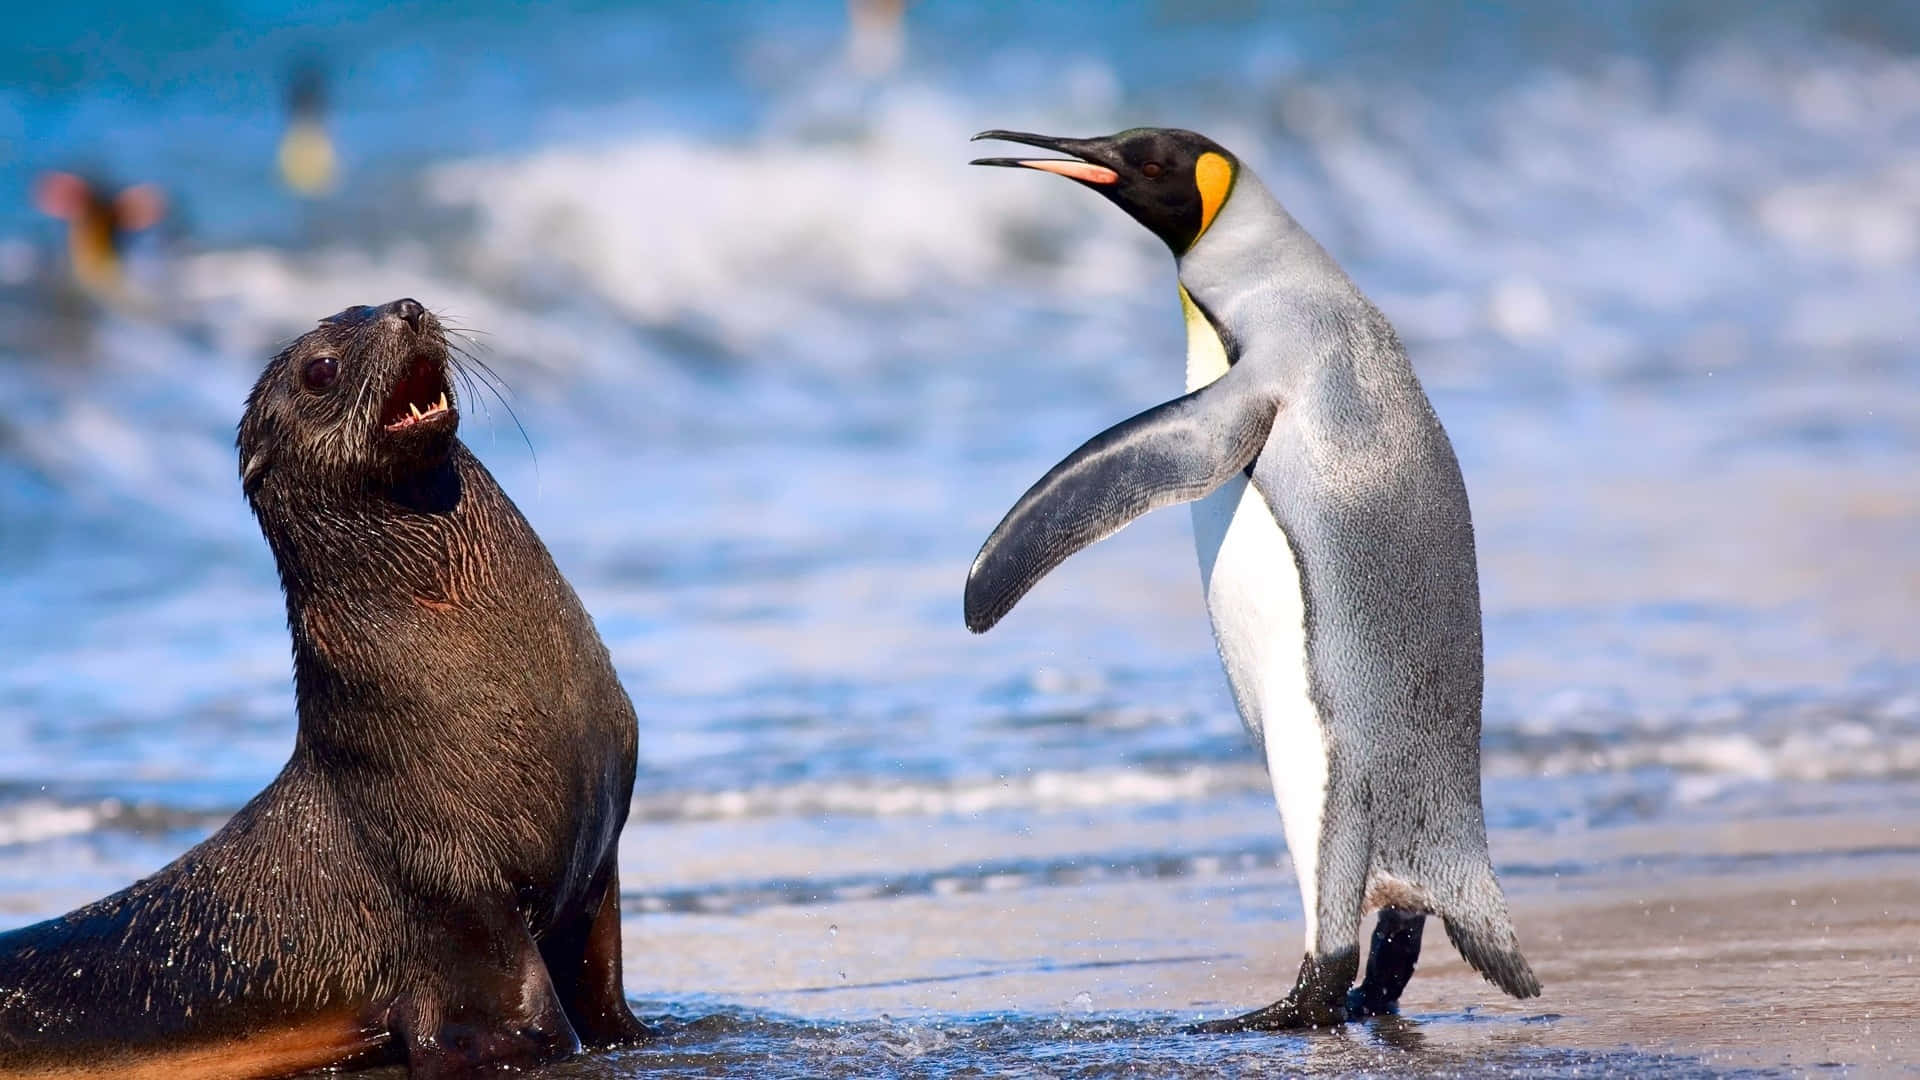 King Penguinand Seal Interaction Wallpaper